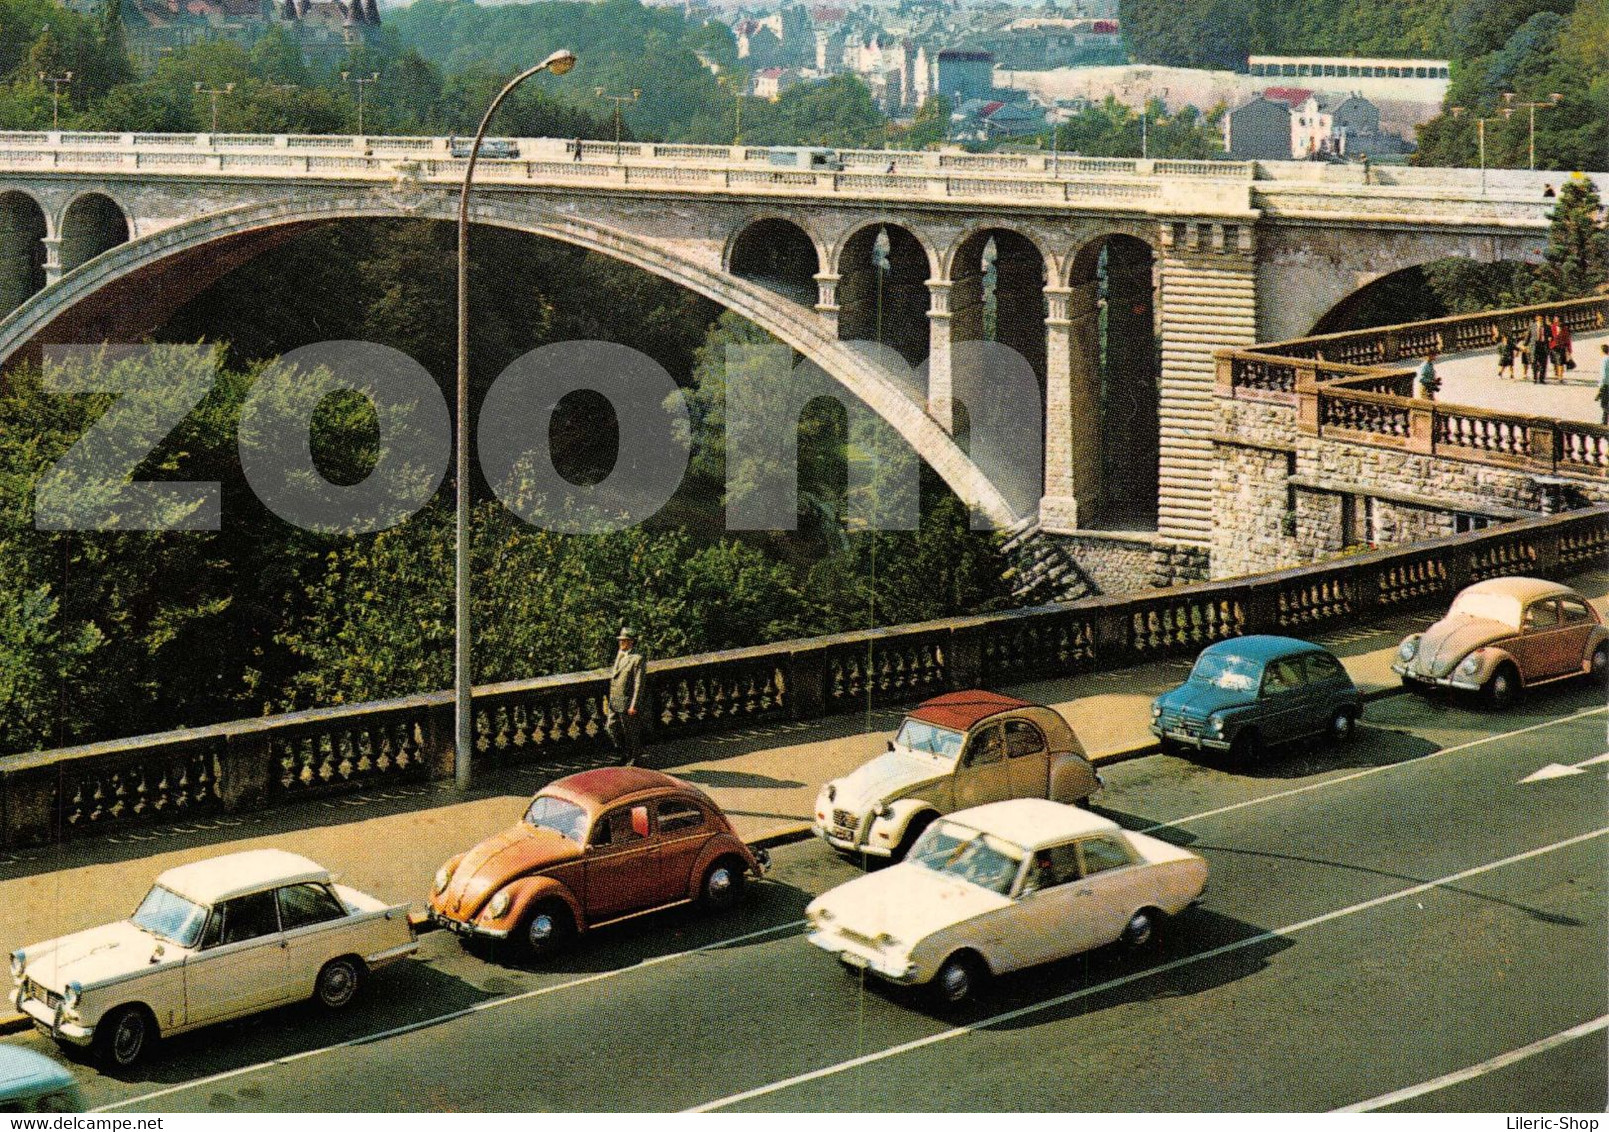 LUXEMBOURG - Pont Adolphe - Automobiles 404 Peugeot Ford Taunus 2 Cv Citroën Vx Cox Fiat 600  Cpsm GF 1971 ♥♥♥ - Luxemburg - Stad